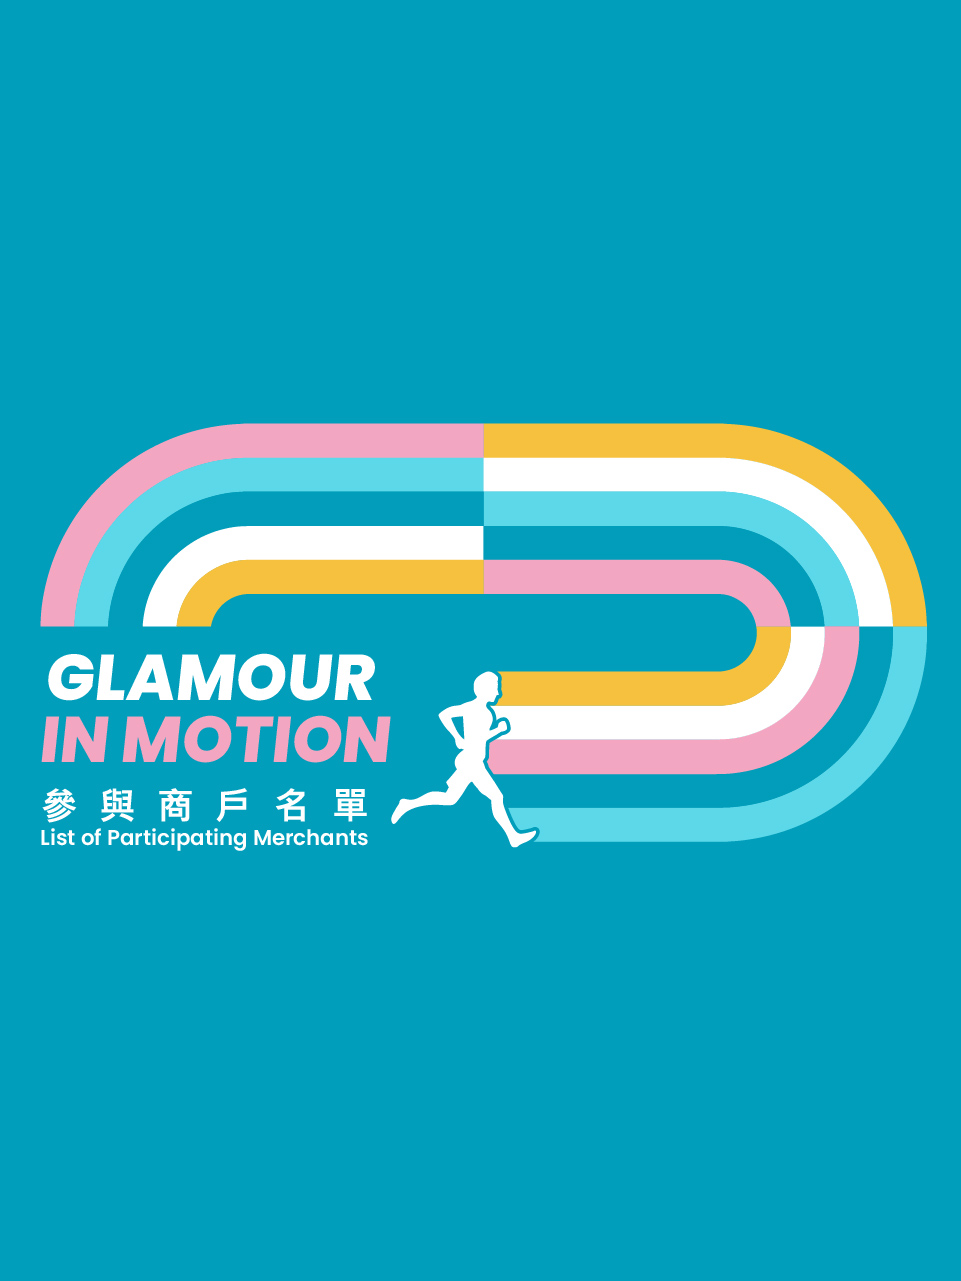 Glamour in Motion 電子現金券參與商戶名單